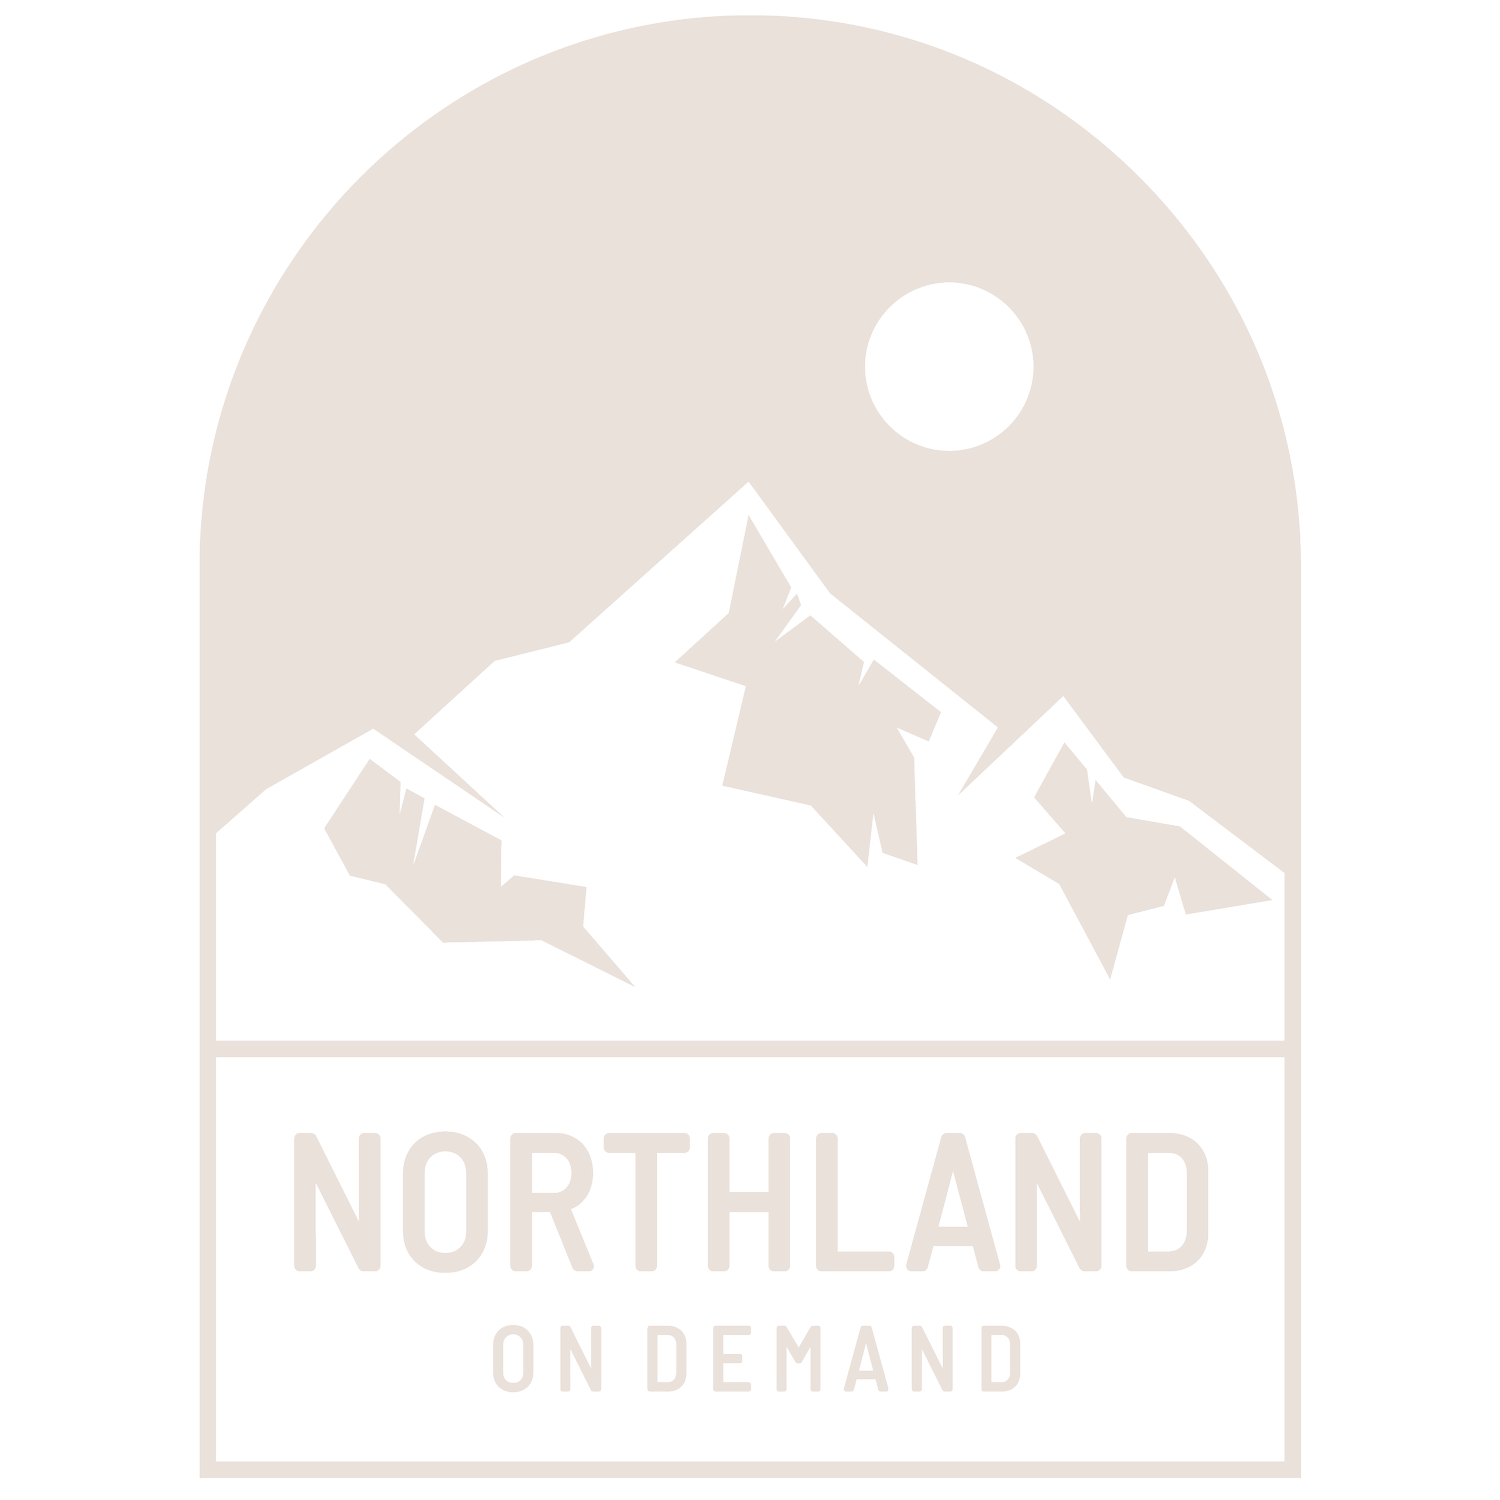 Northland On Demand